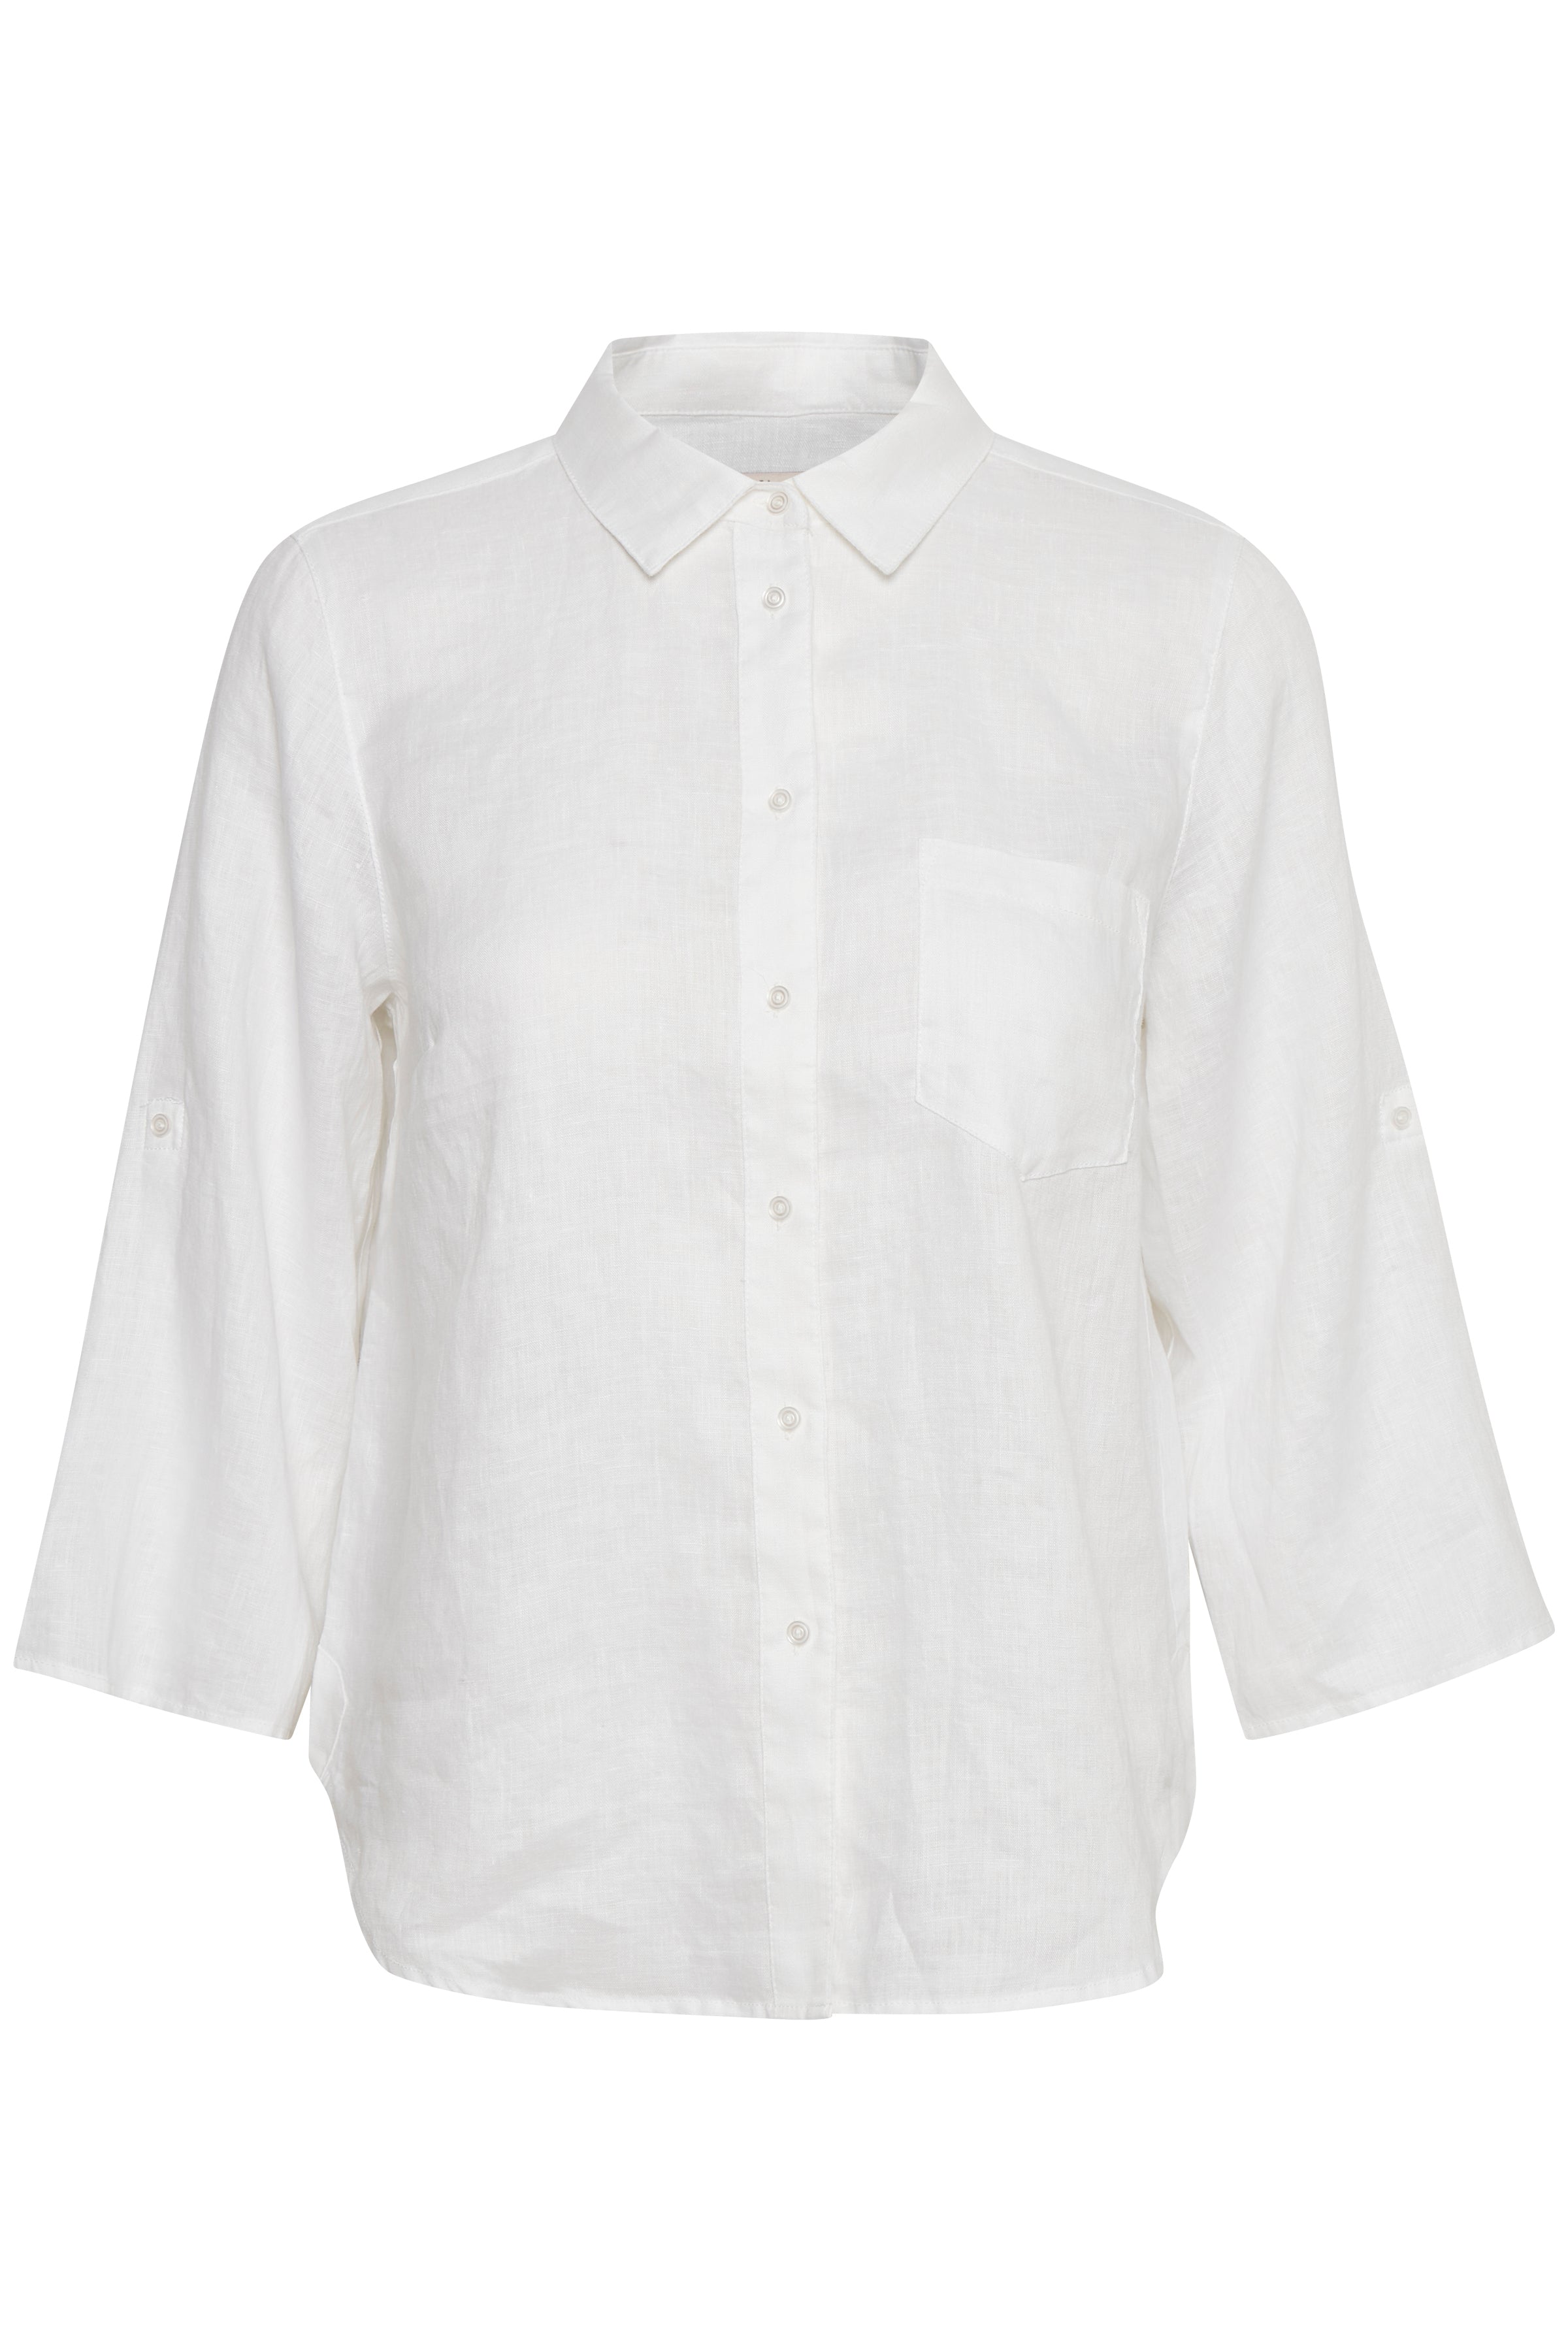 CindiesPW Shirt - Bright White